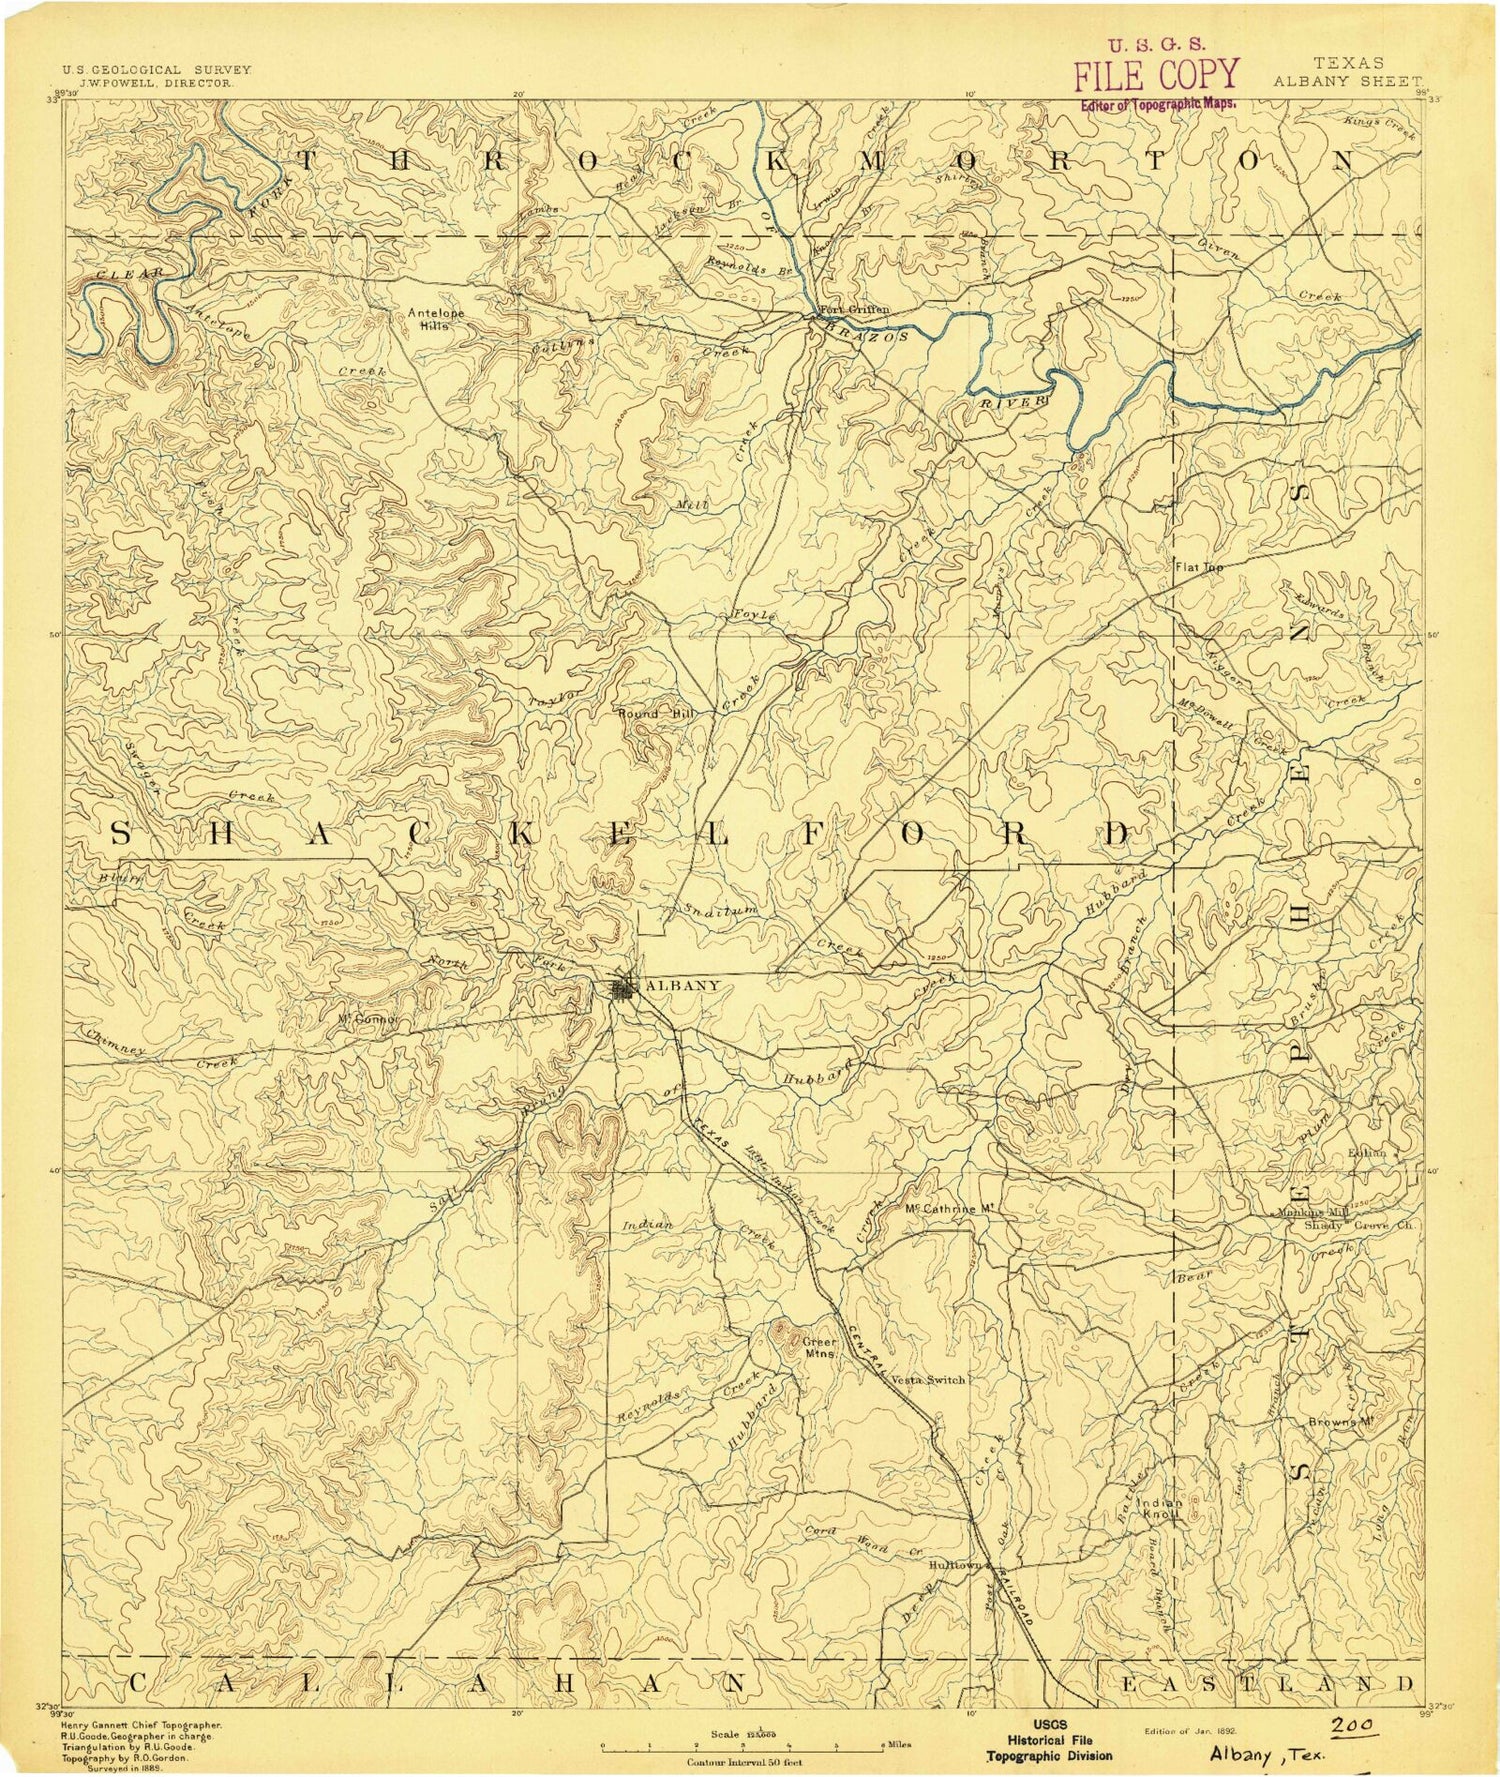 Historic 1892 Albany Texas 30'x30' Topo Map Image